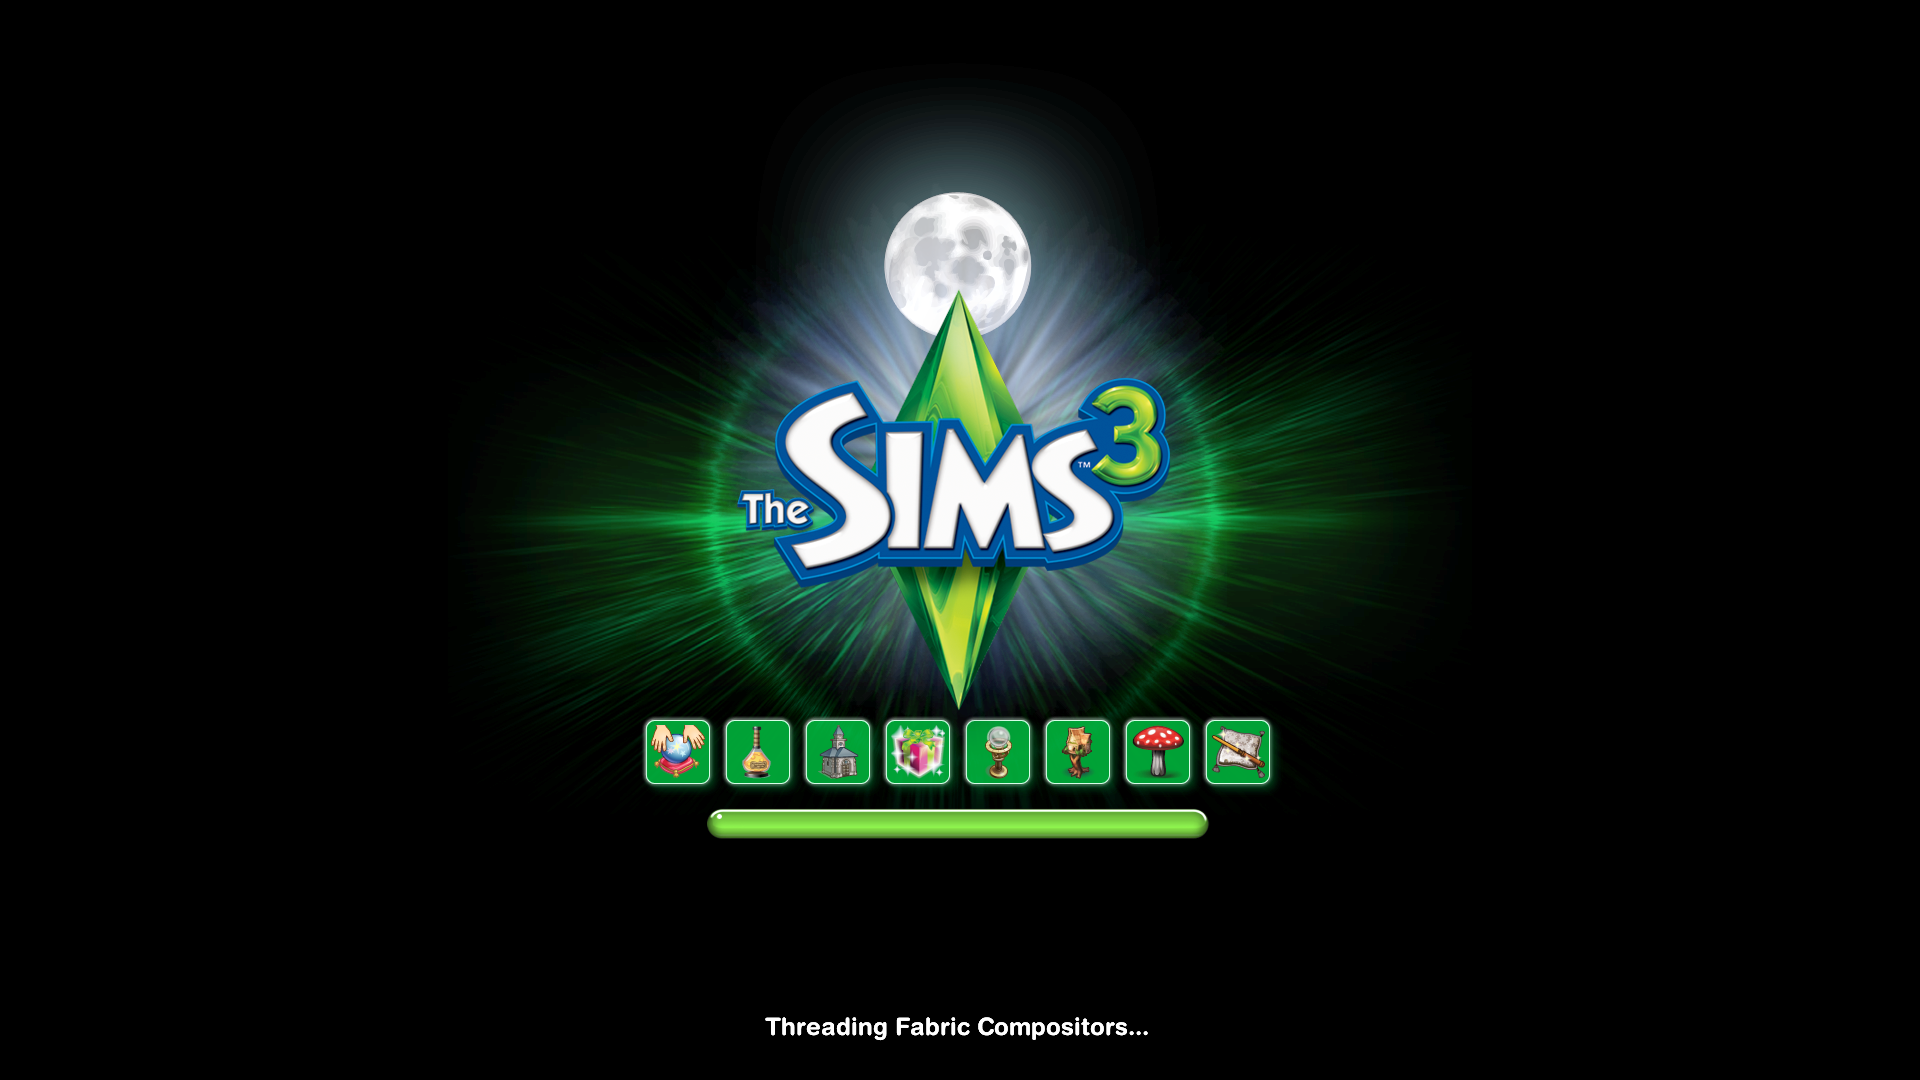 Load sims. Симс 3 экран загрузки. The SIMS 3 дополнения. Симс 3 загрузочный экран. Симс загрузочный экран симс 3.